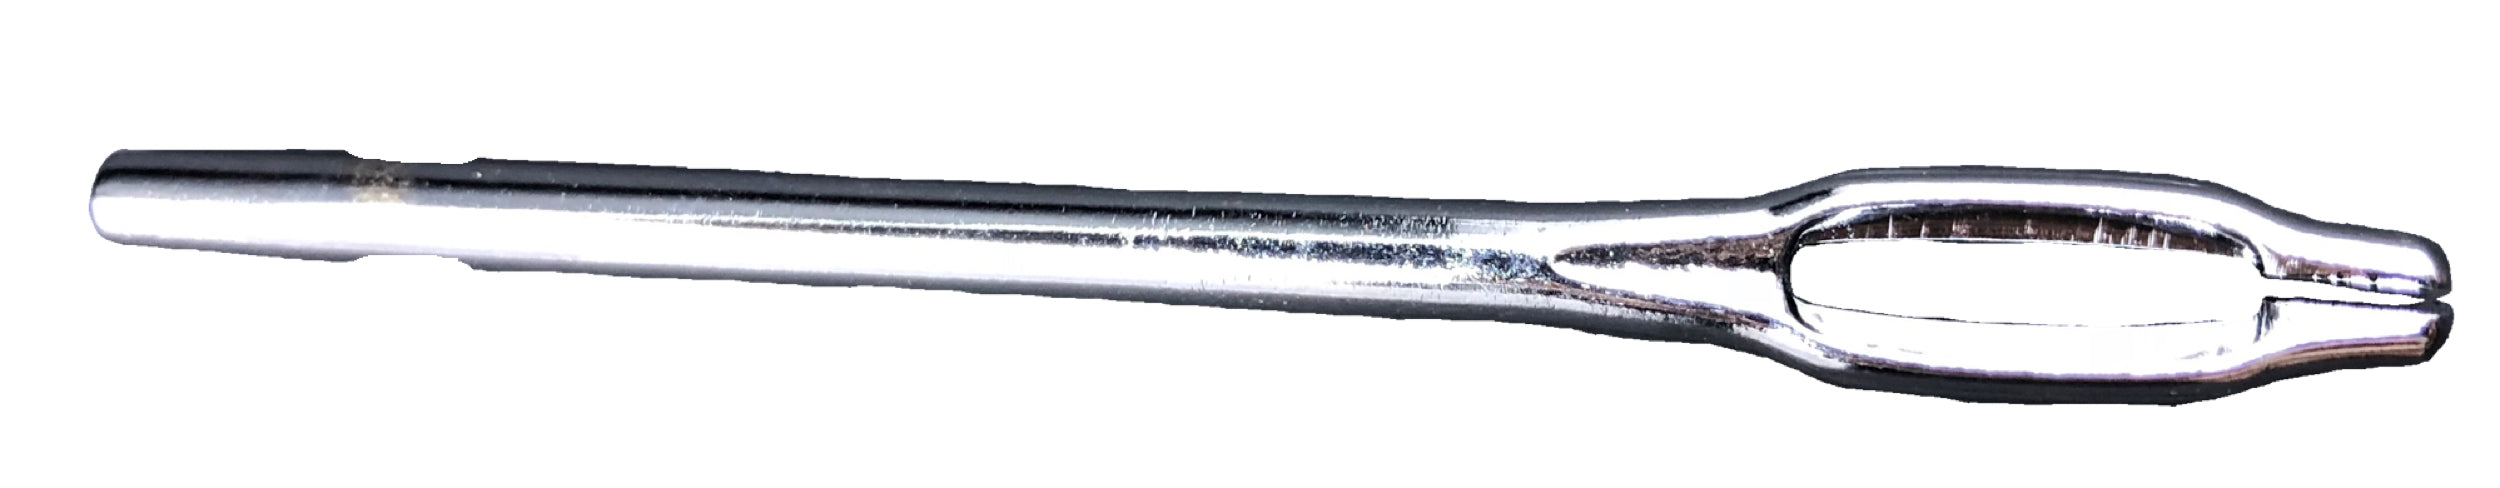 Replacement Split Eye Needle for Metal T-Handle Tire Plug Repair Tool